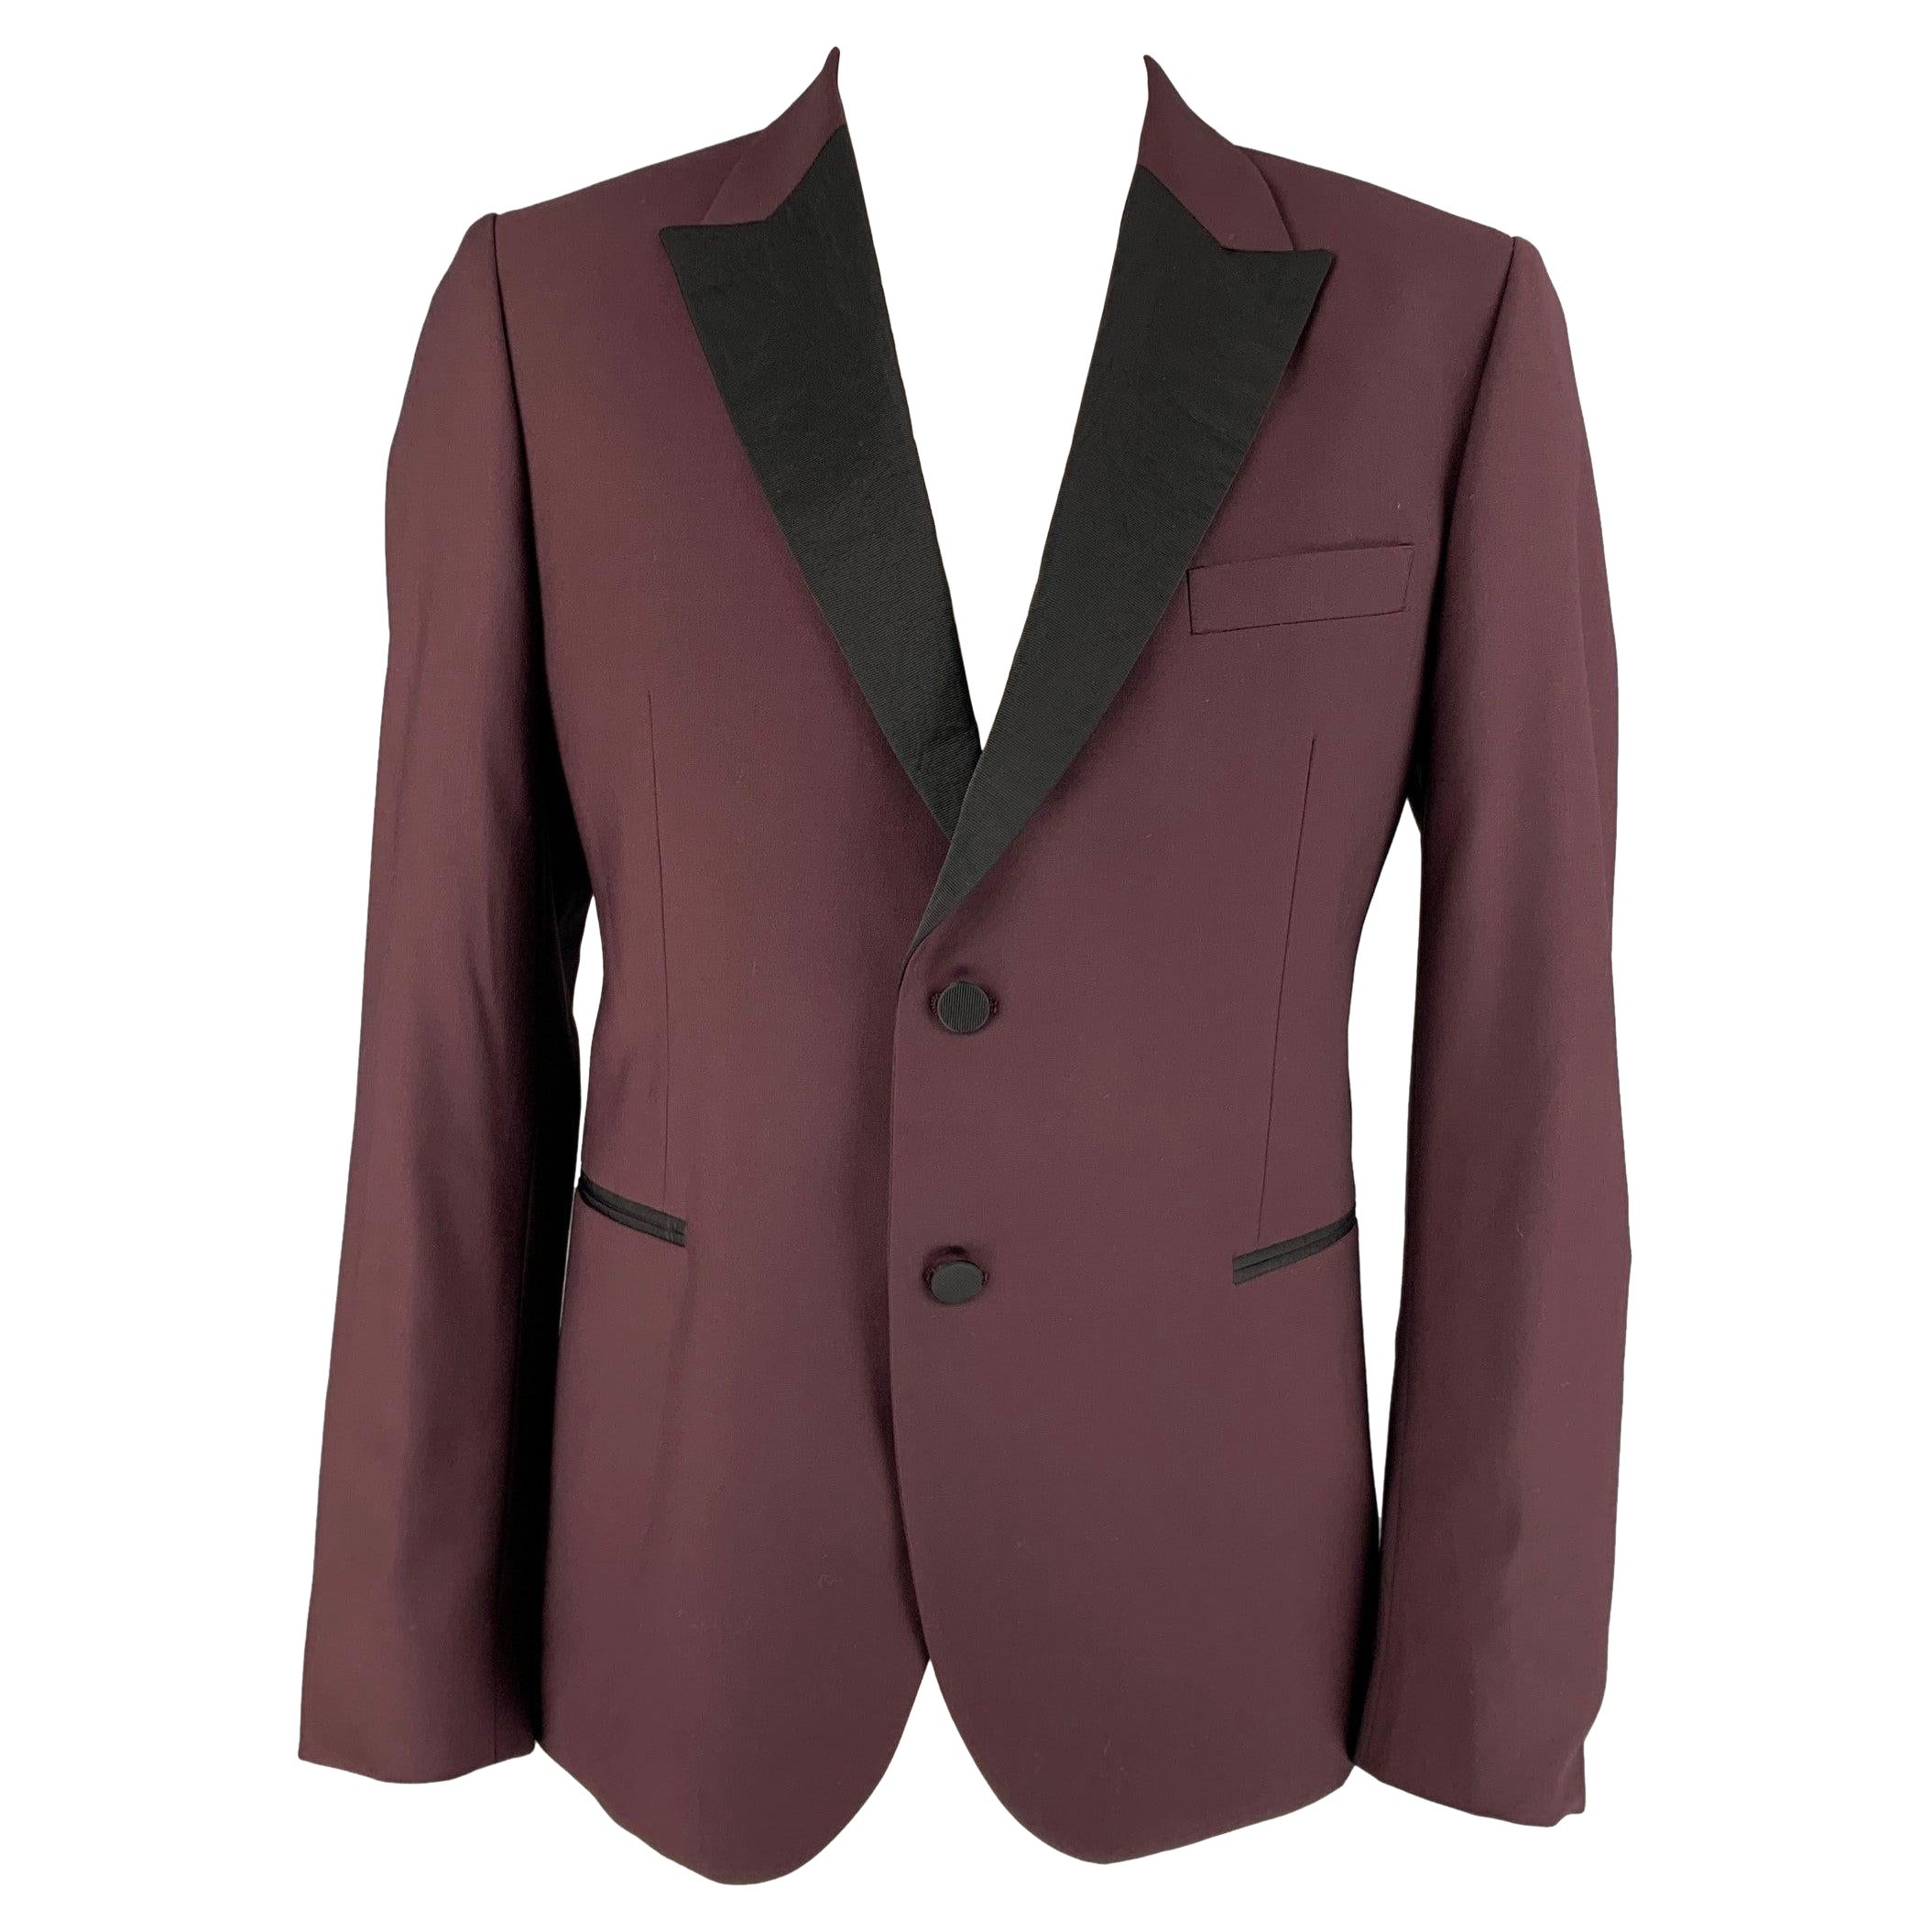 PAUL SMITH "Soho Fit" Size 46 Burgundy & Black Wool Peak Lapel Sport Coat For Sale